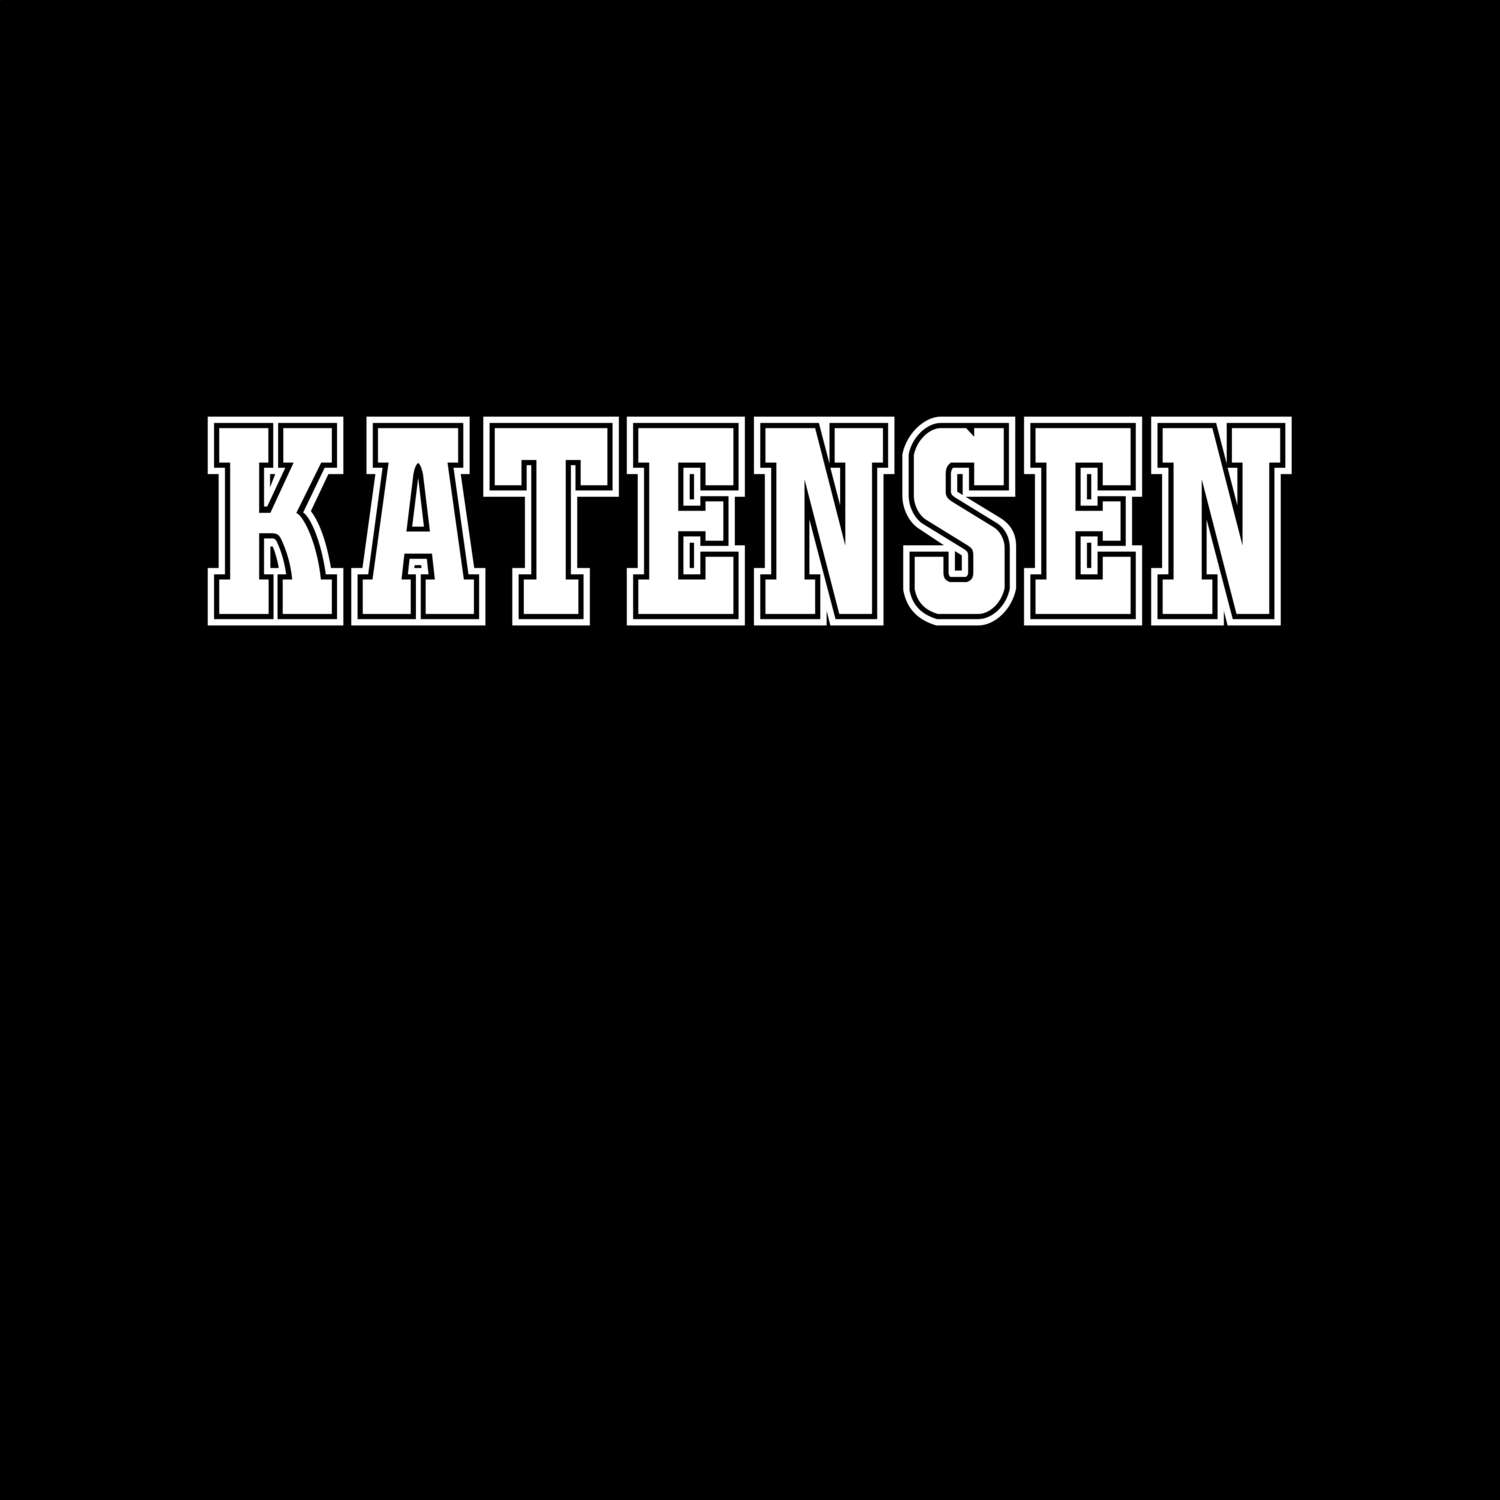 Katensen T-Shirt »Classic«